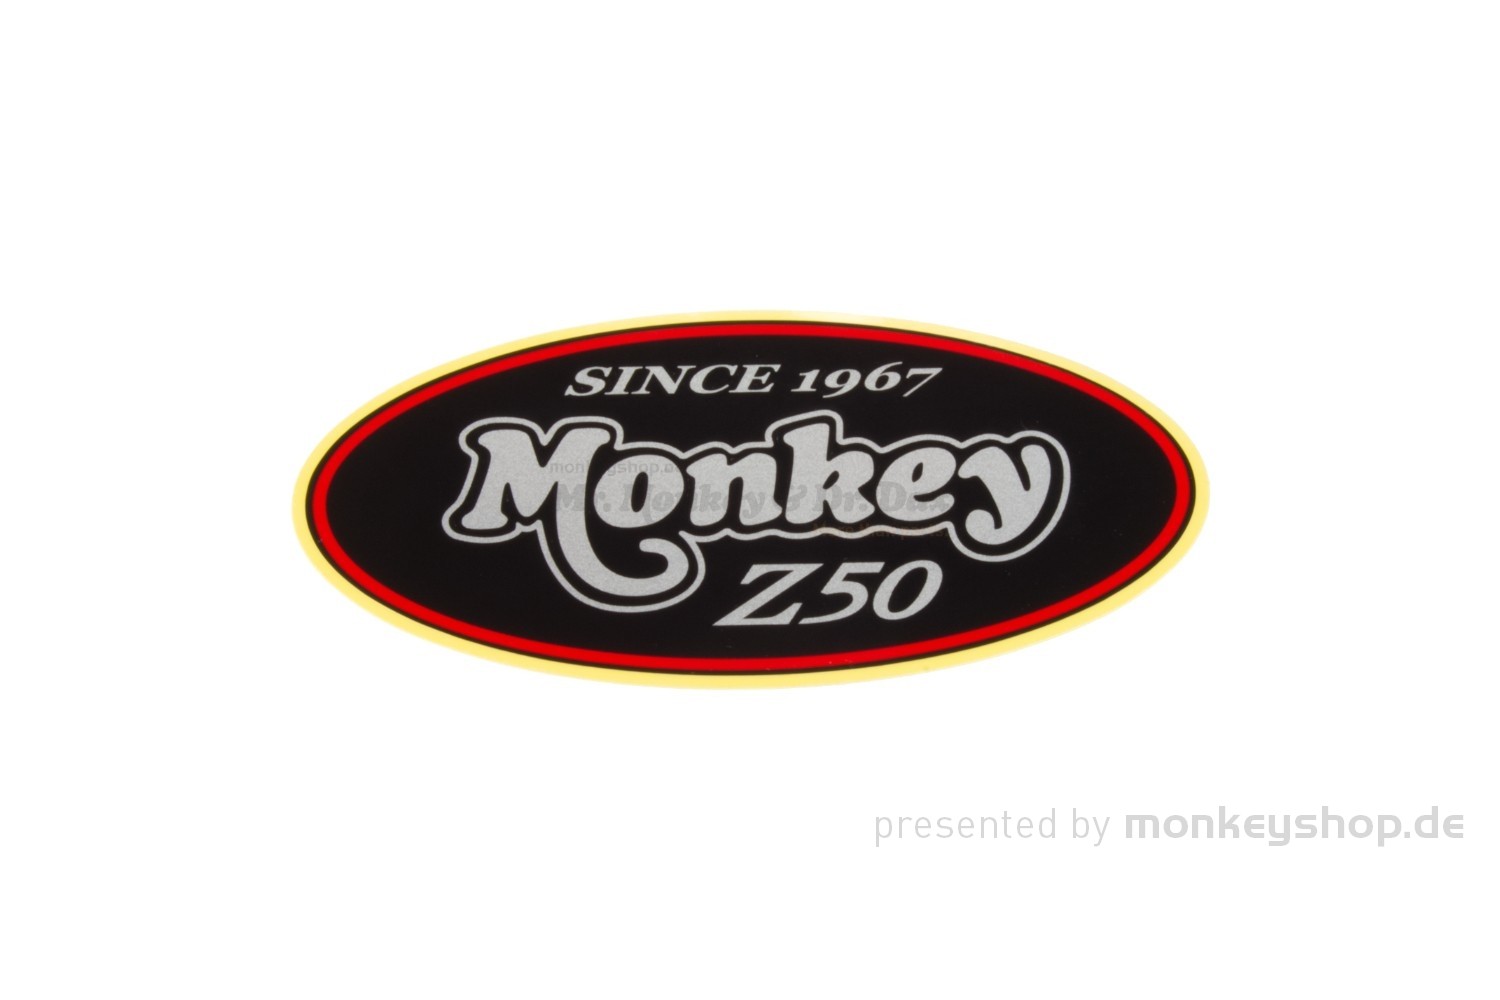 https://monkeyshop.de/9018-superlarge_default/honda-seitendeckel-aufkleber-emblem-schwarz-rot-silber-since-1967-monkey-z50-f-monkey-z50.jpg